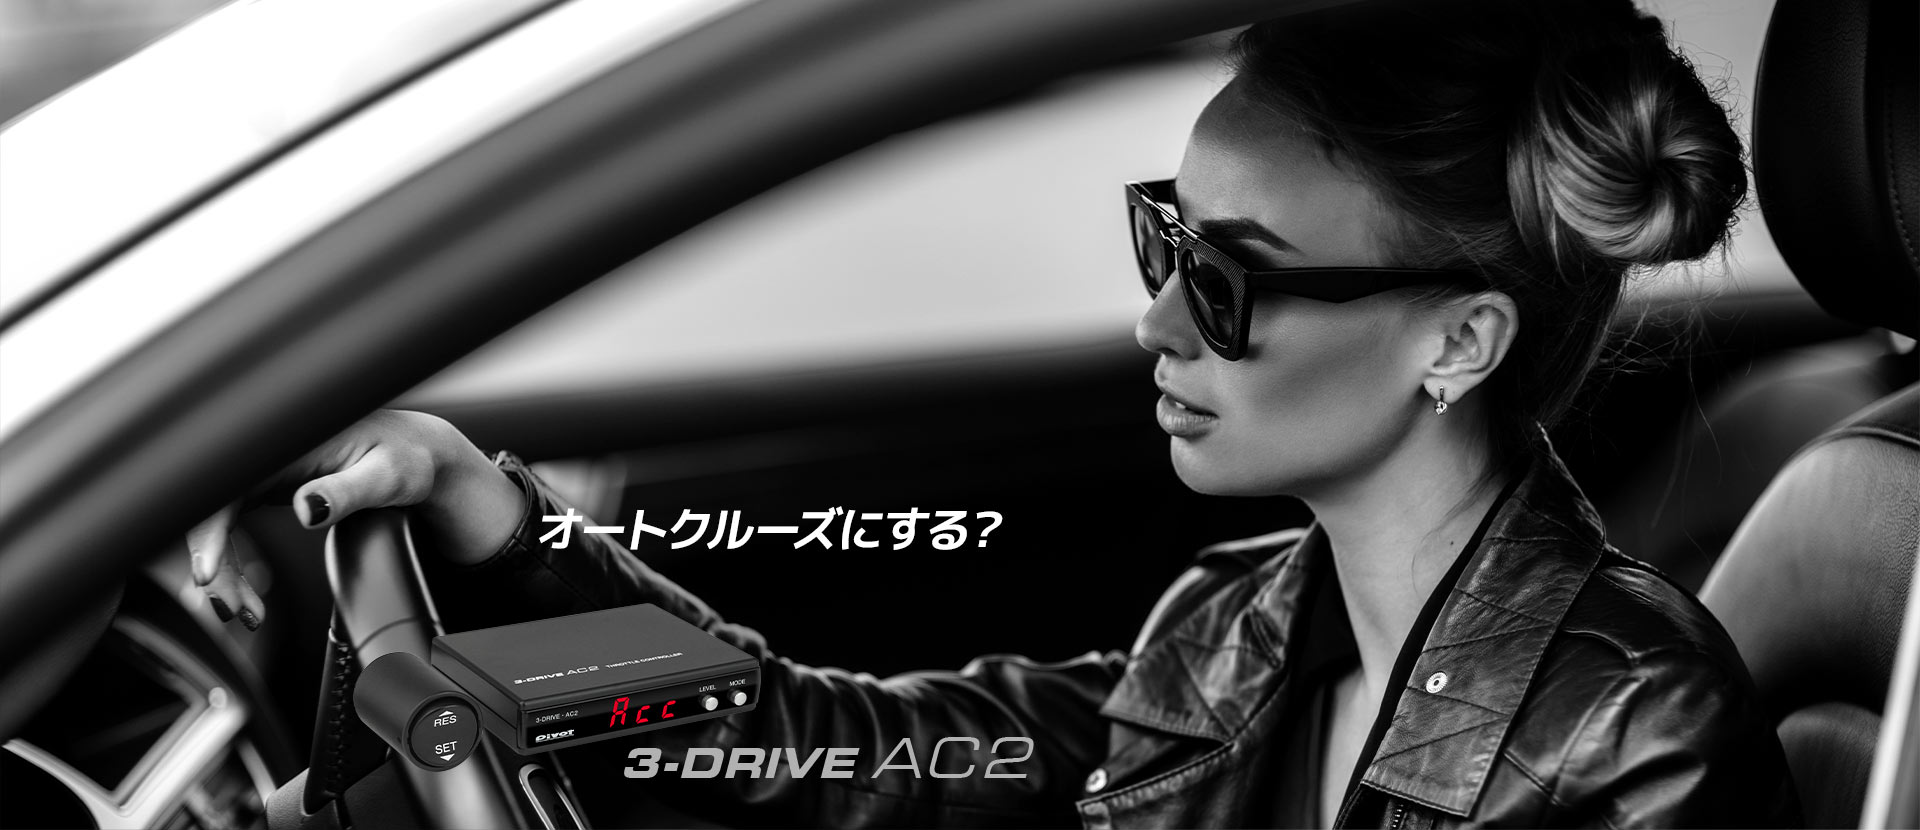 3-drive AC2